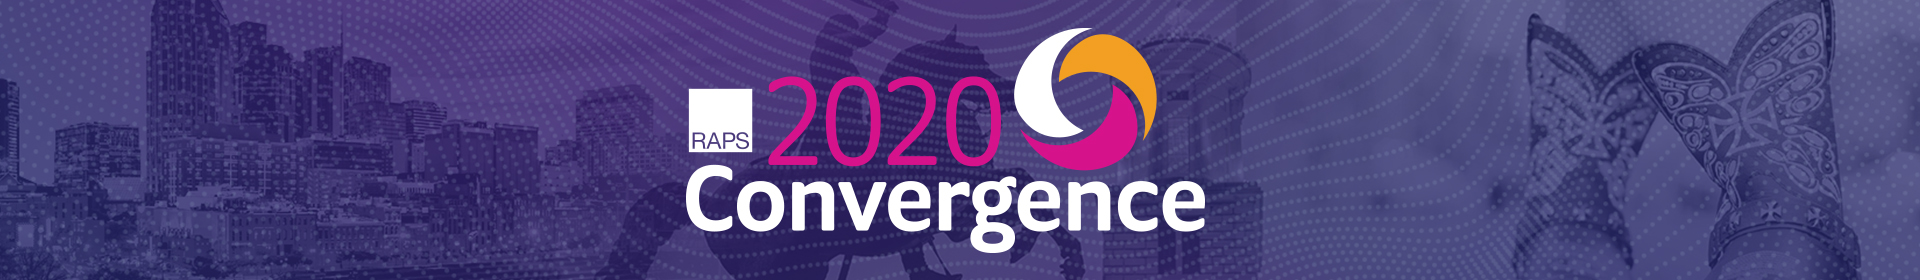 2020 RAPS Convergence Event Banner